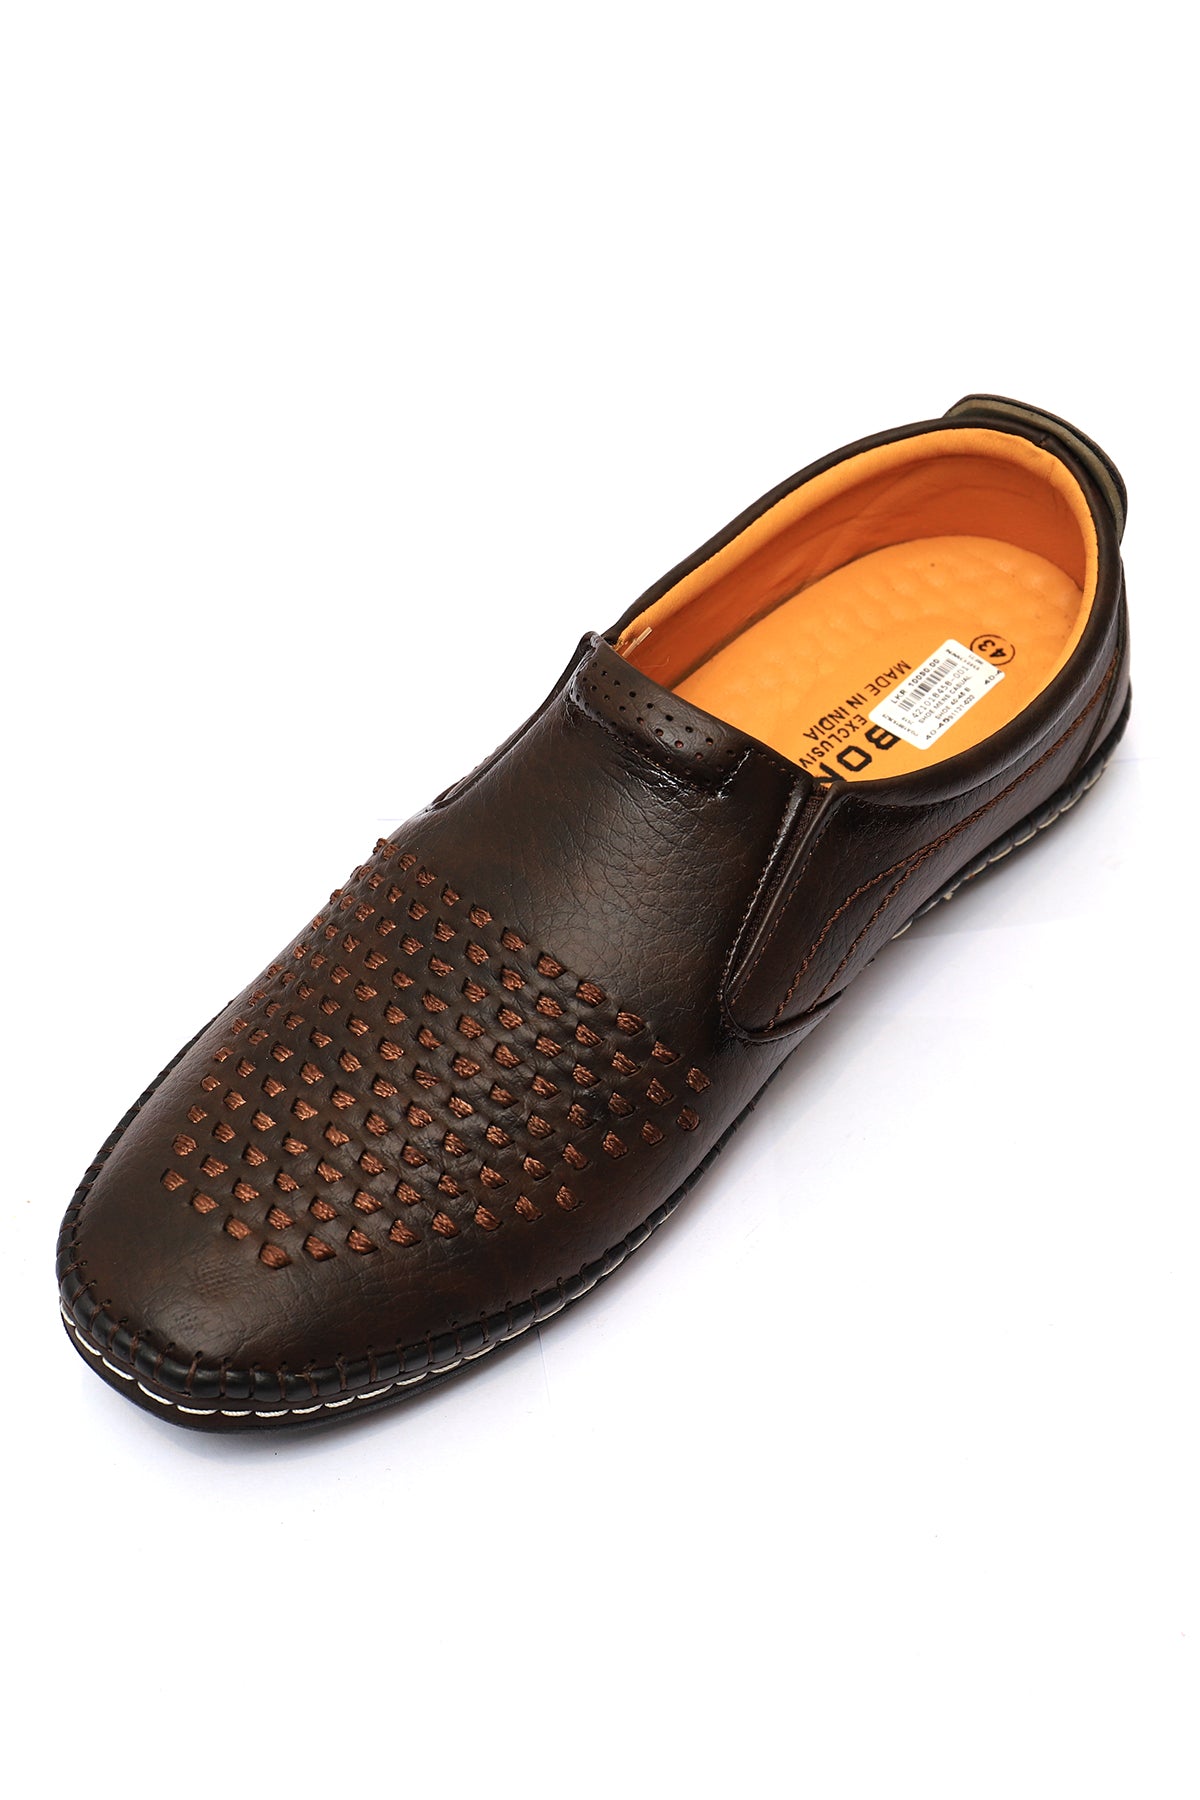 DeRucci Men's Casual Shoe